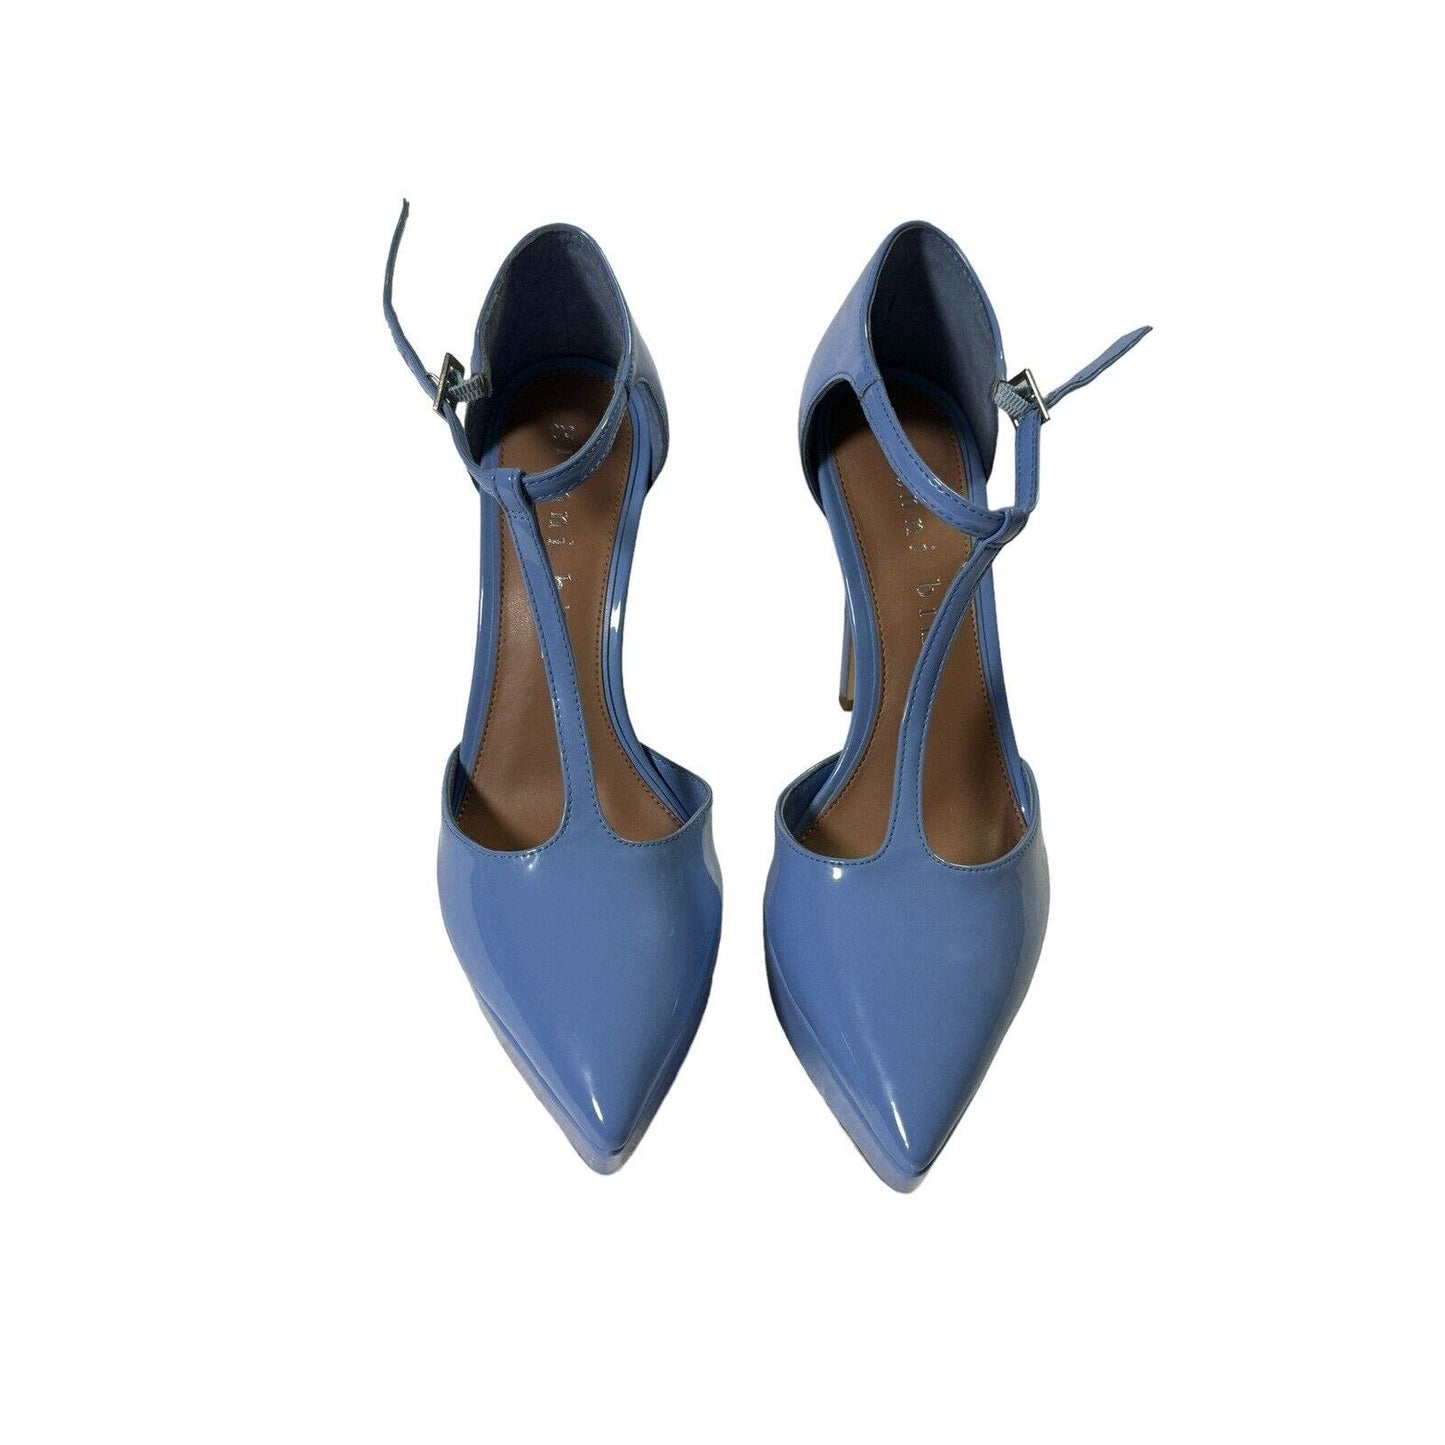 Gianni Bini Blainee Patent Platform T Strap Heels Size 8.5 M